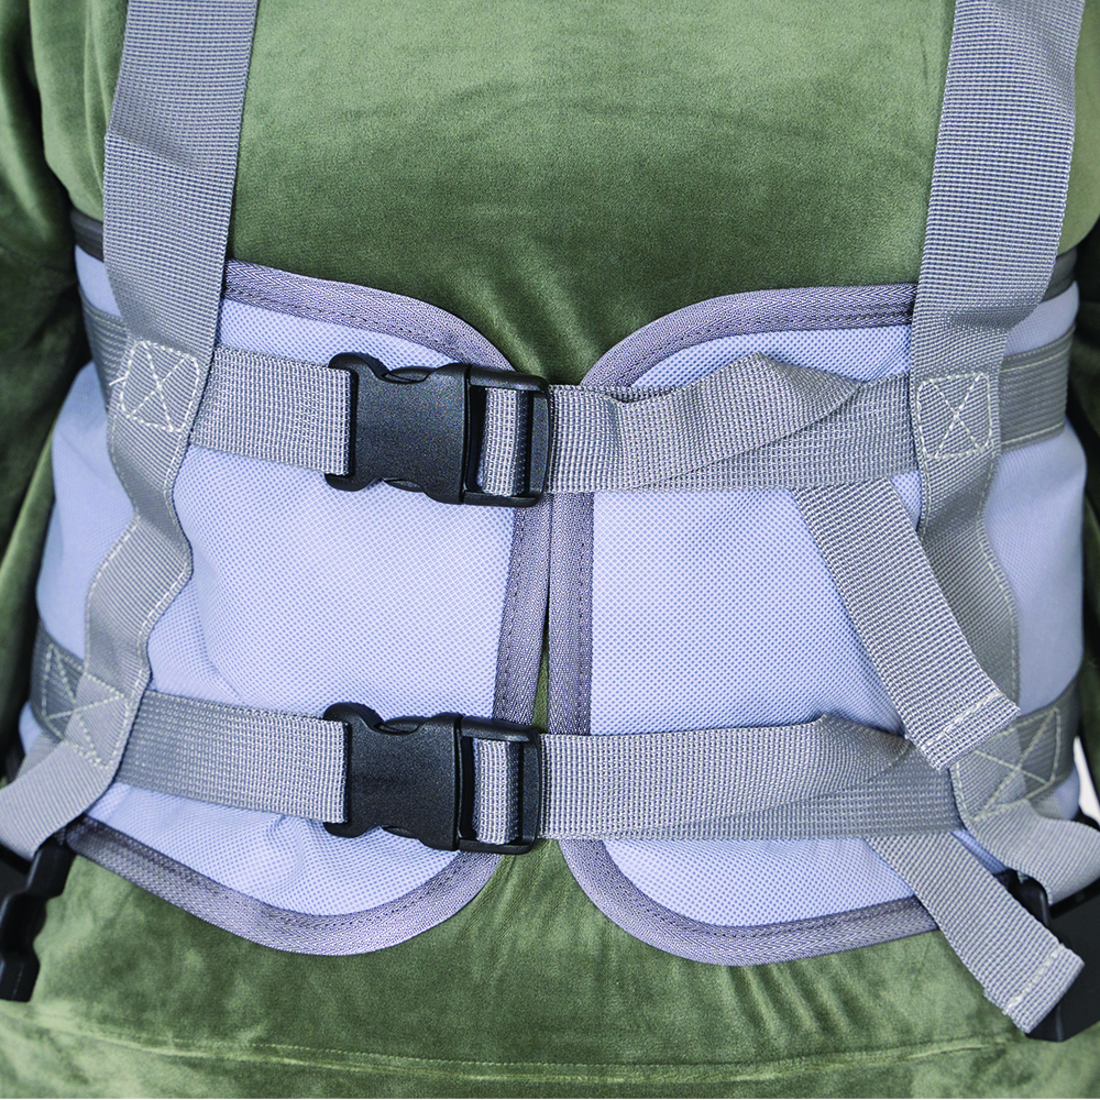 Molift UnoSling Ambulating Vest waistbelt